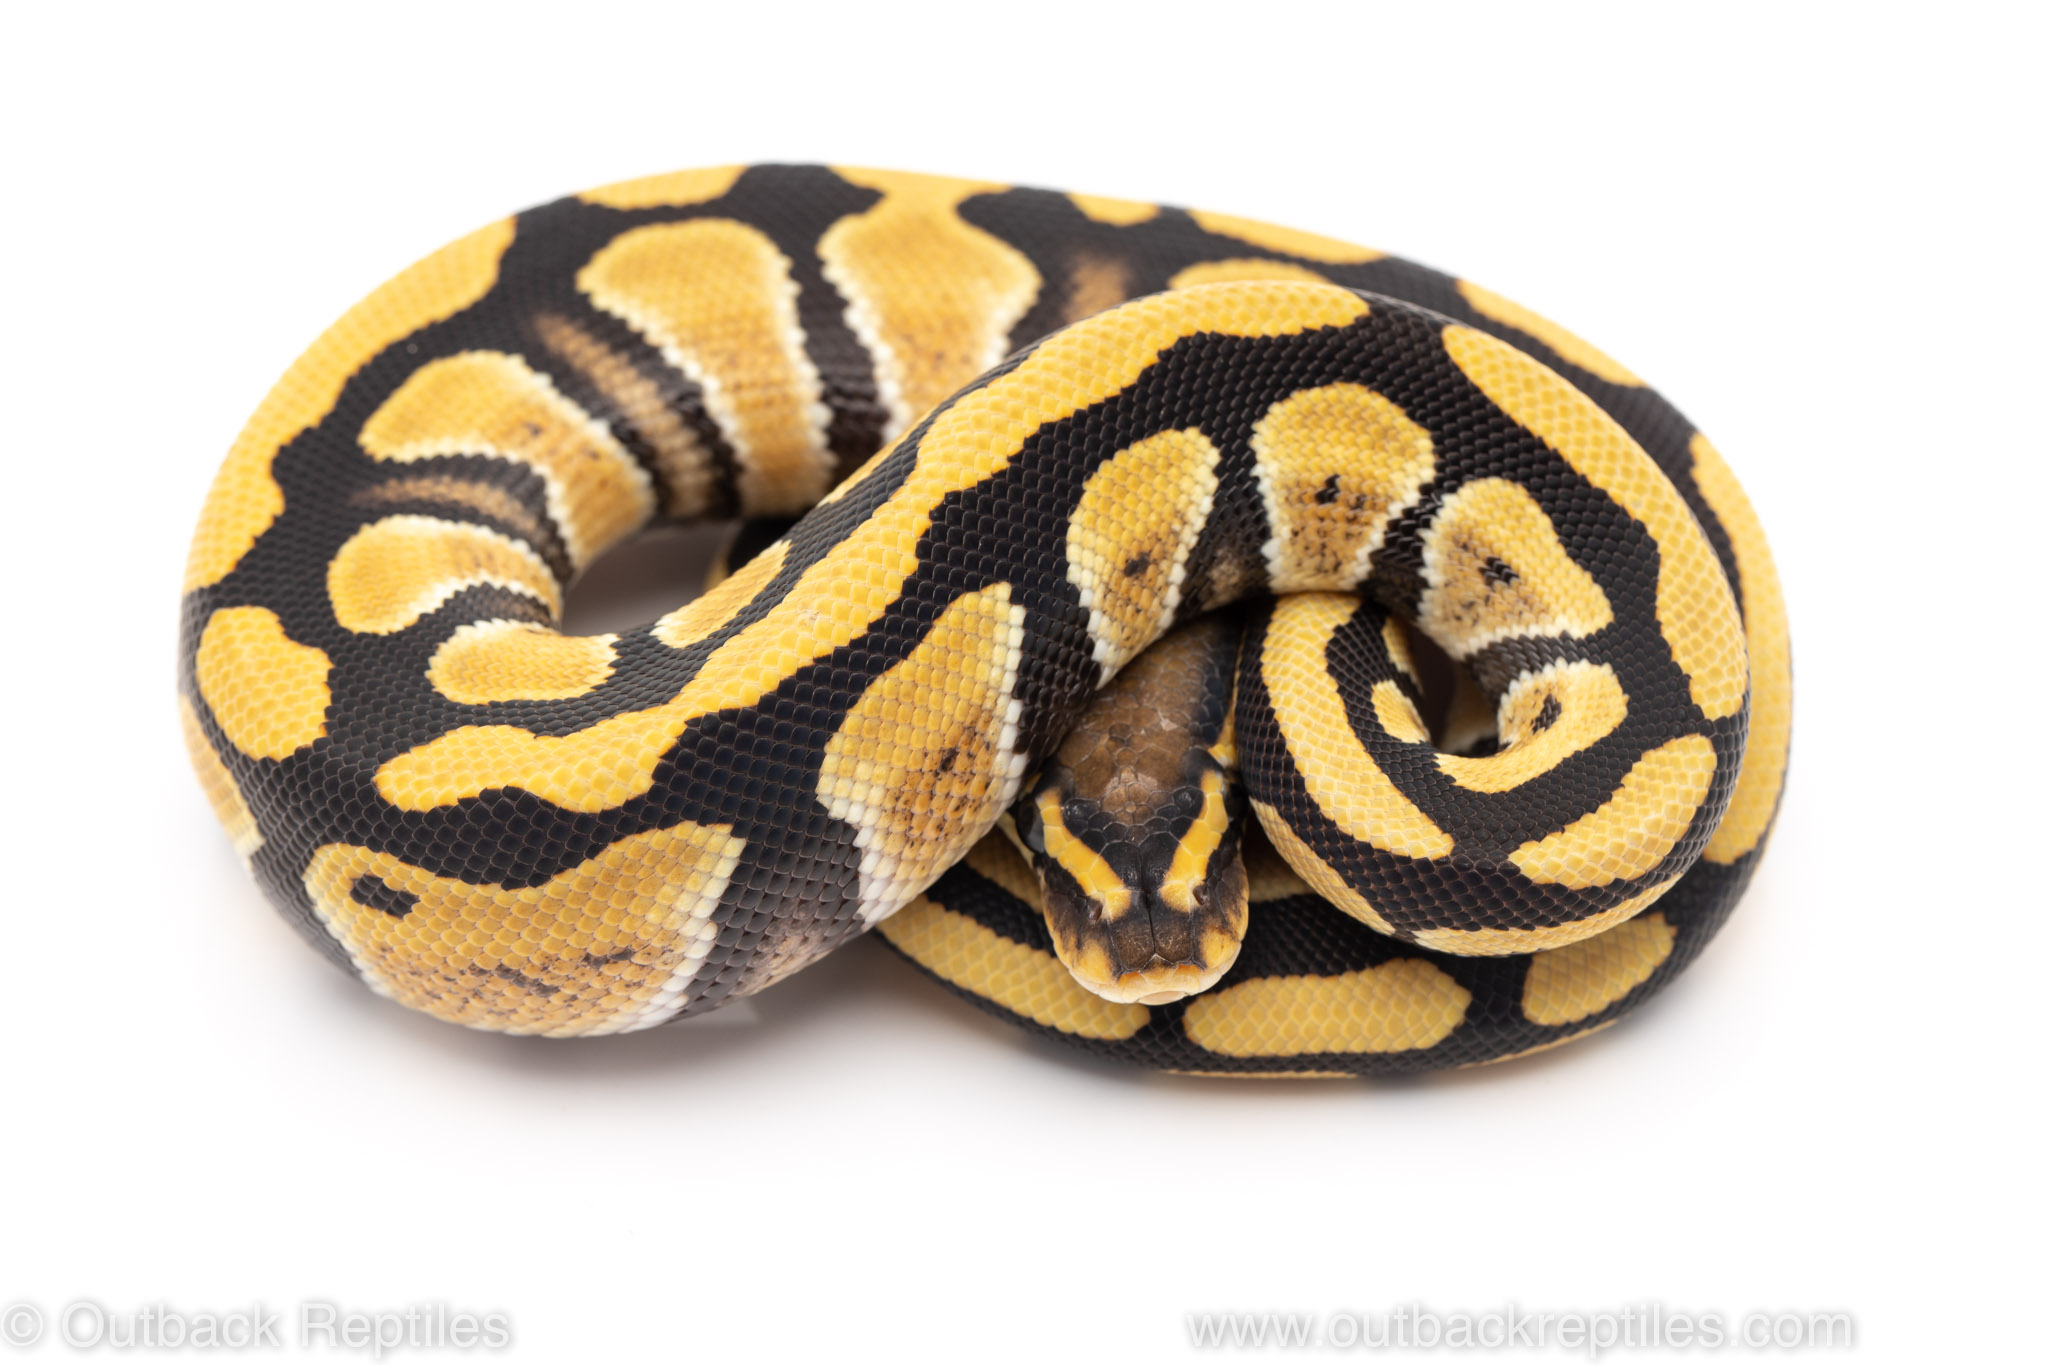 Desert ghost ball python for sale